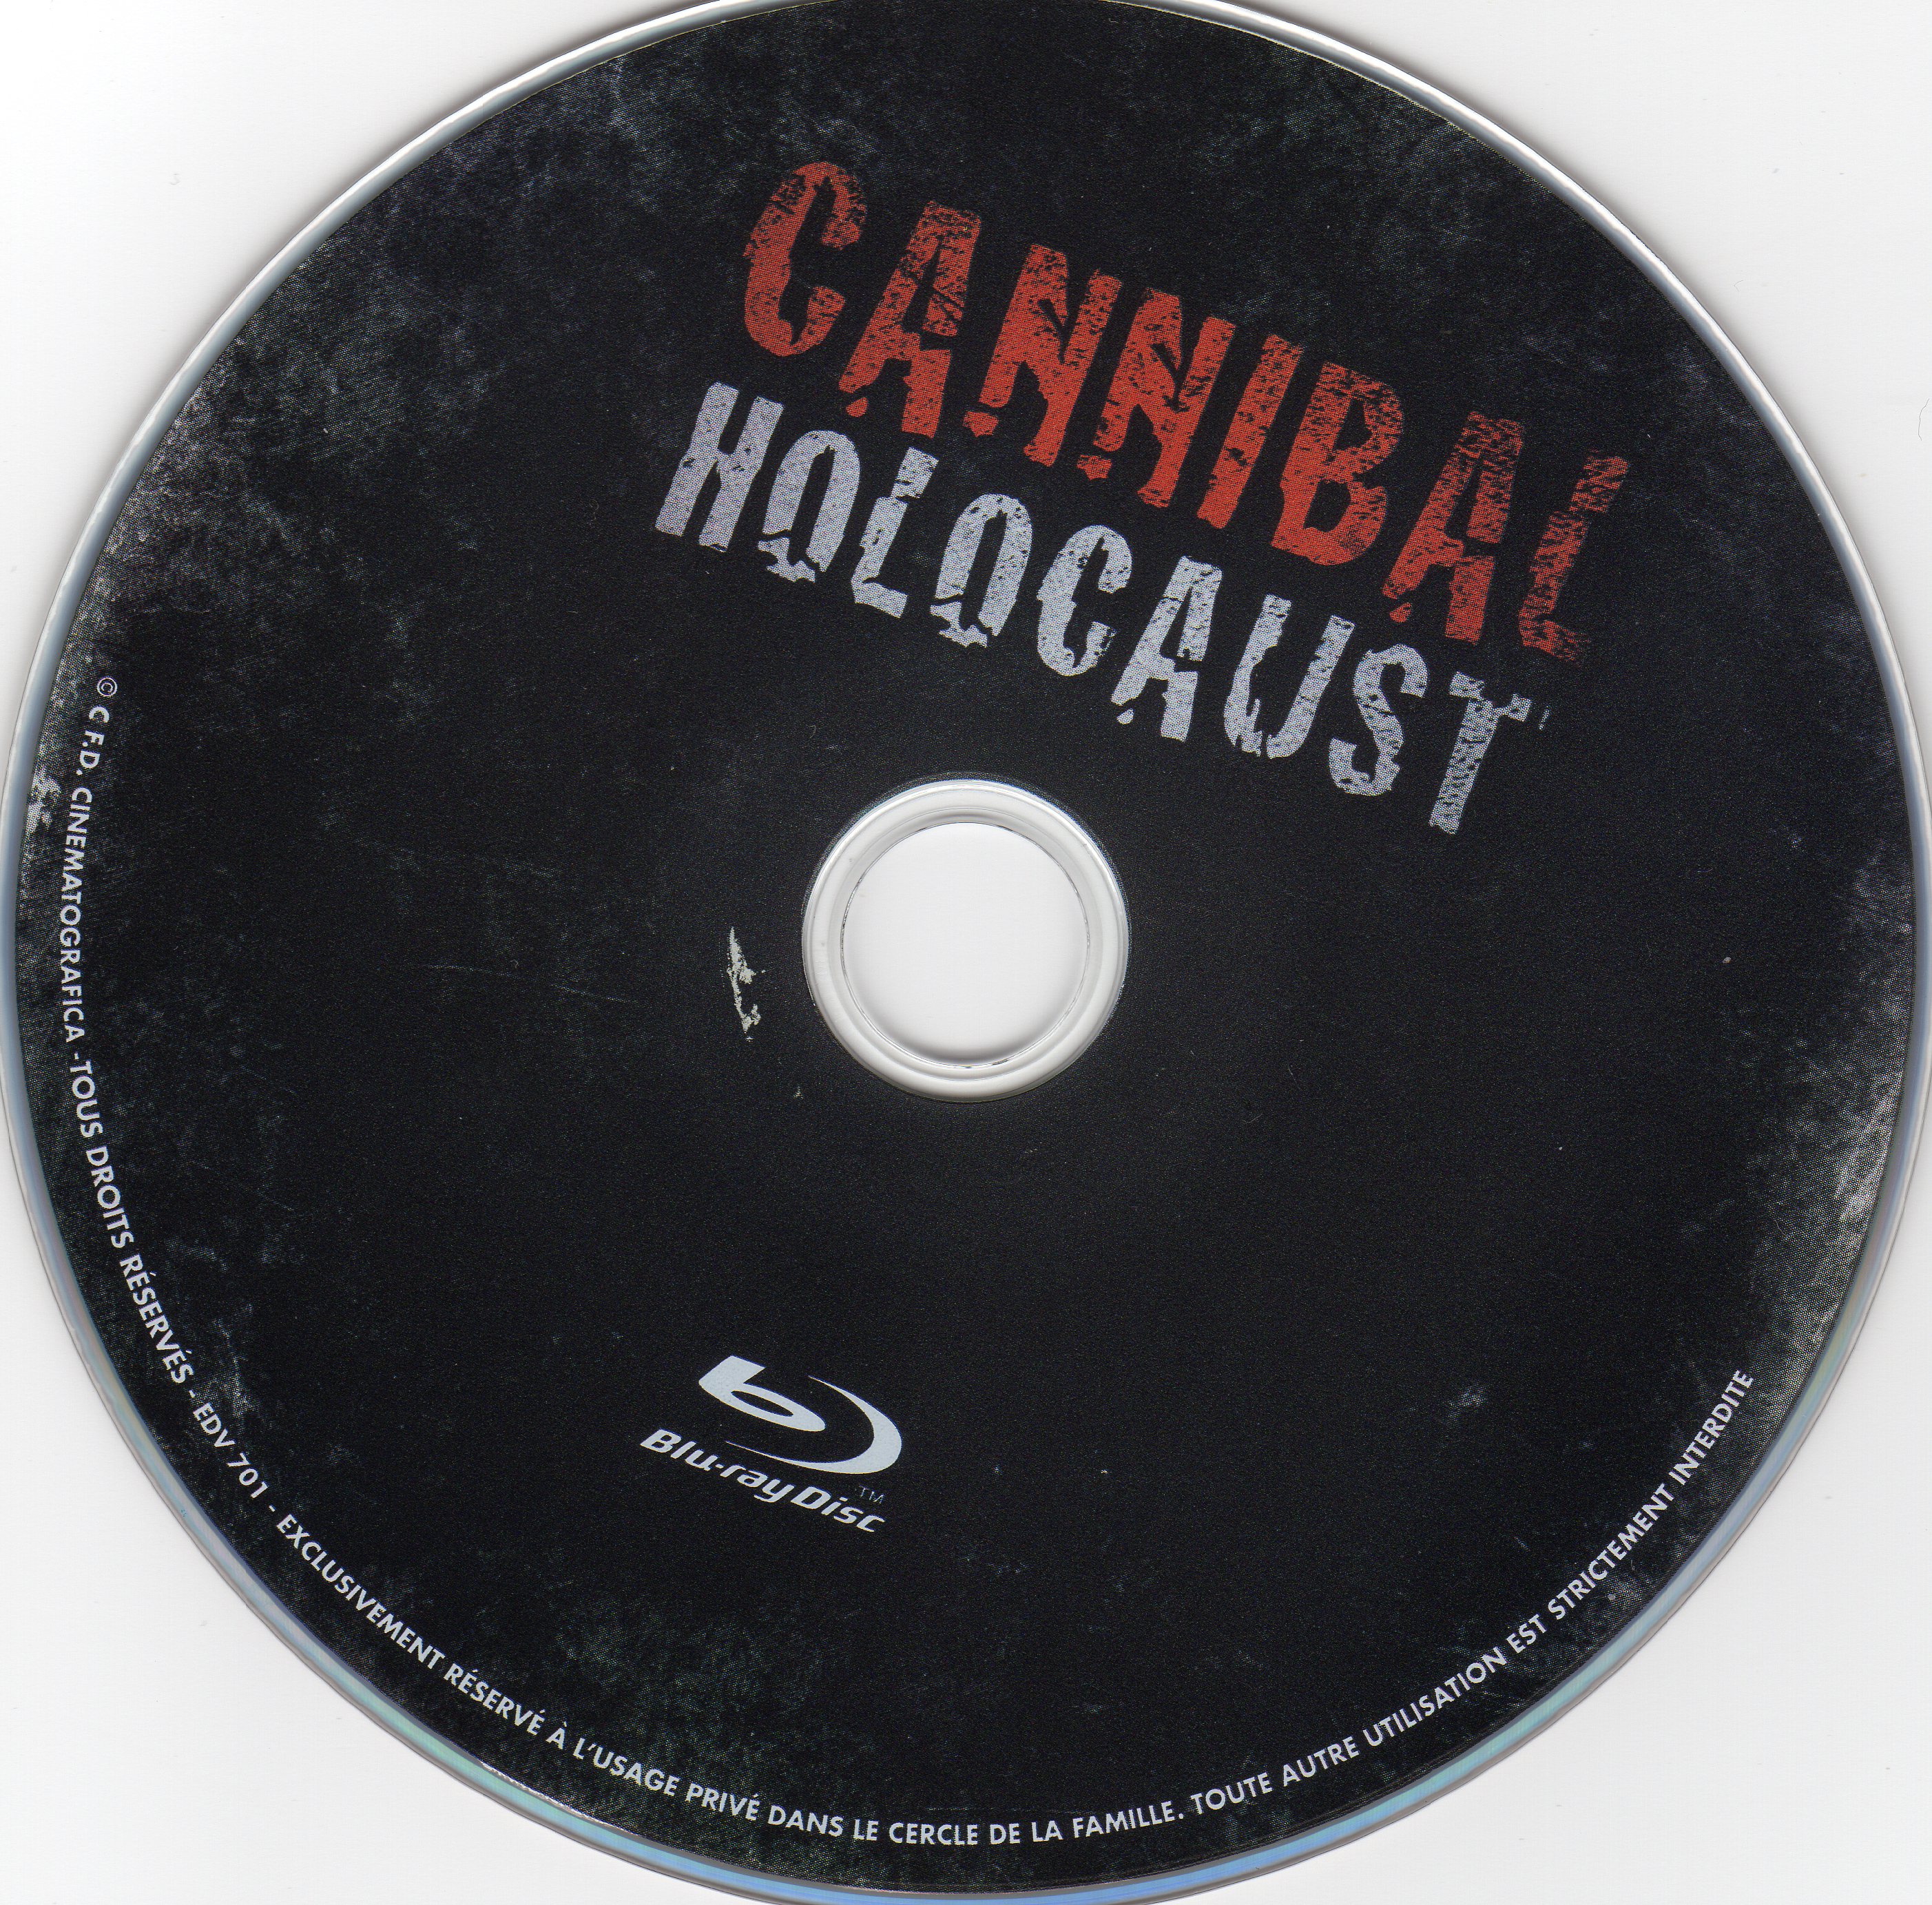 Cannibal holocaust (BLU-RAY)